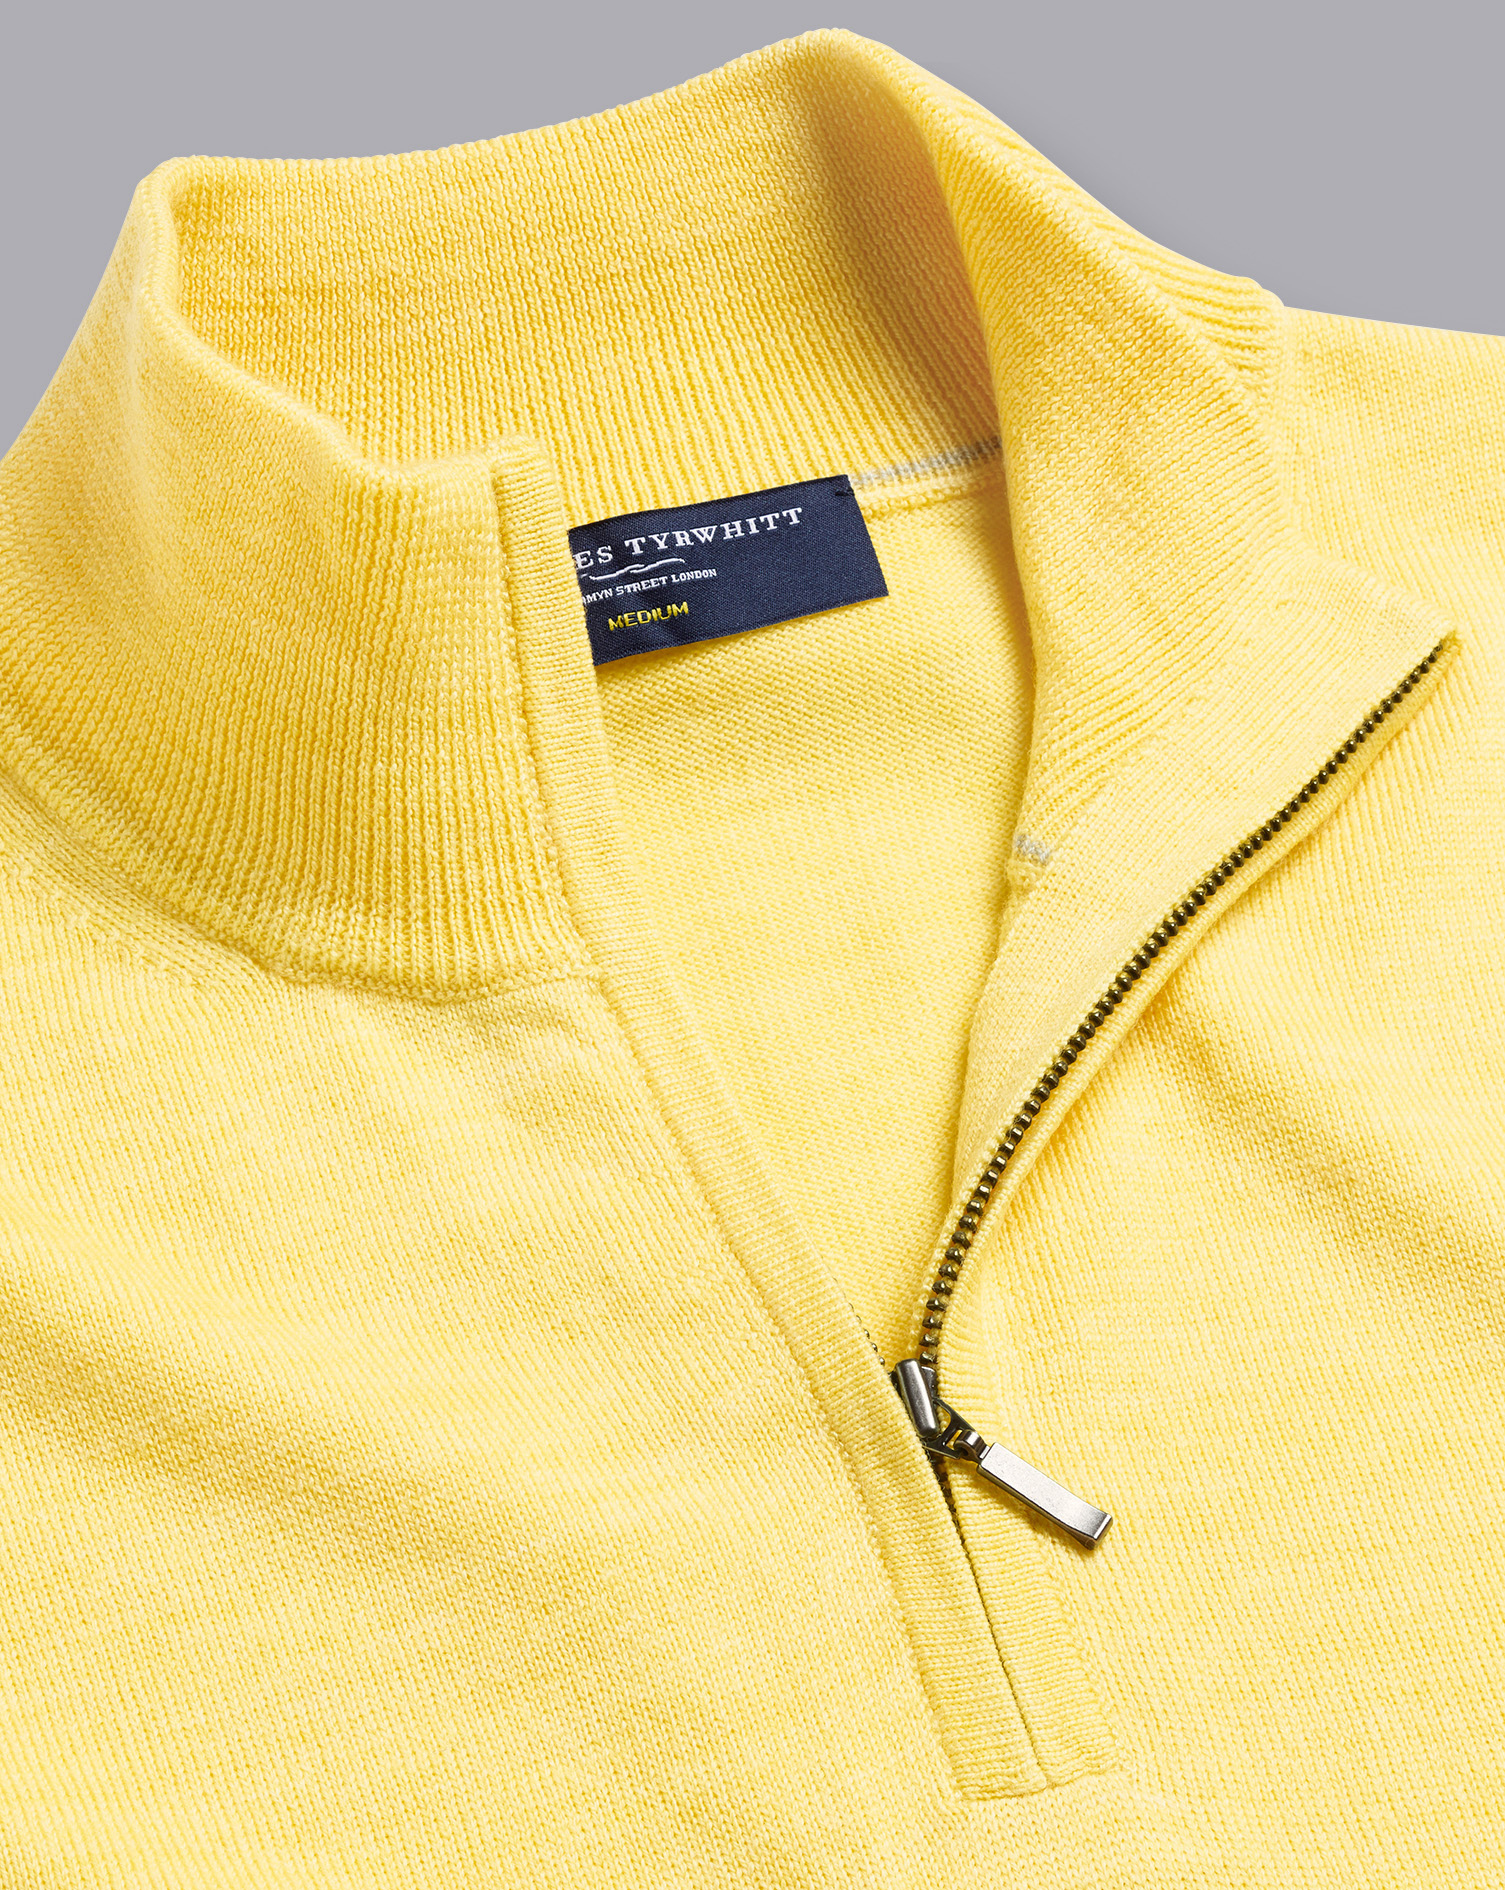 Merino Zip Neck Sweater - Lemon Size Medium
